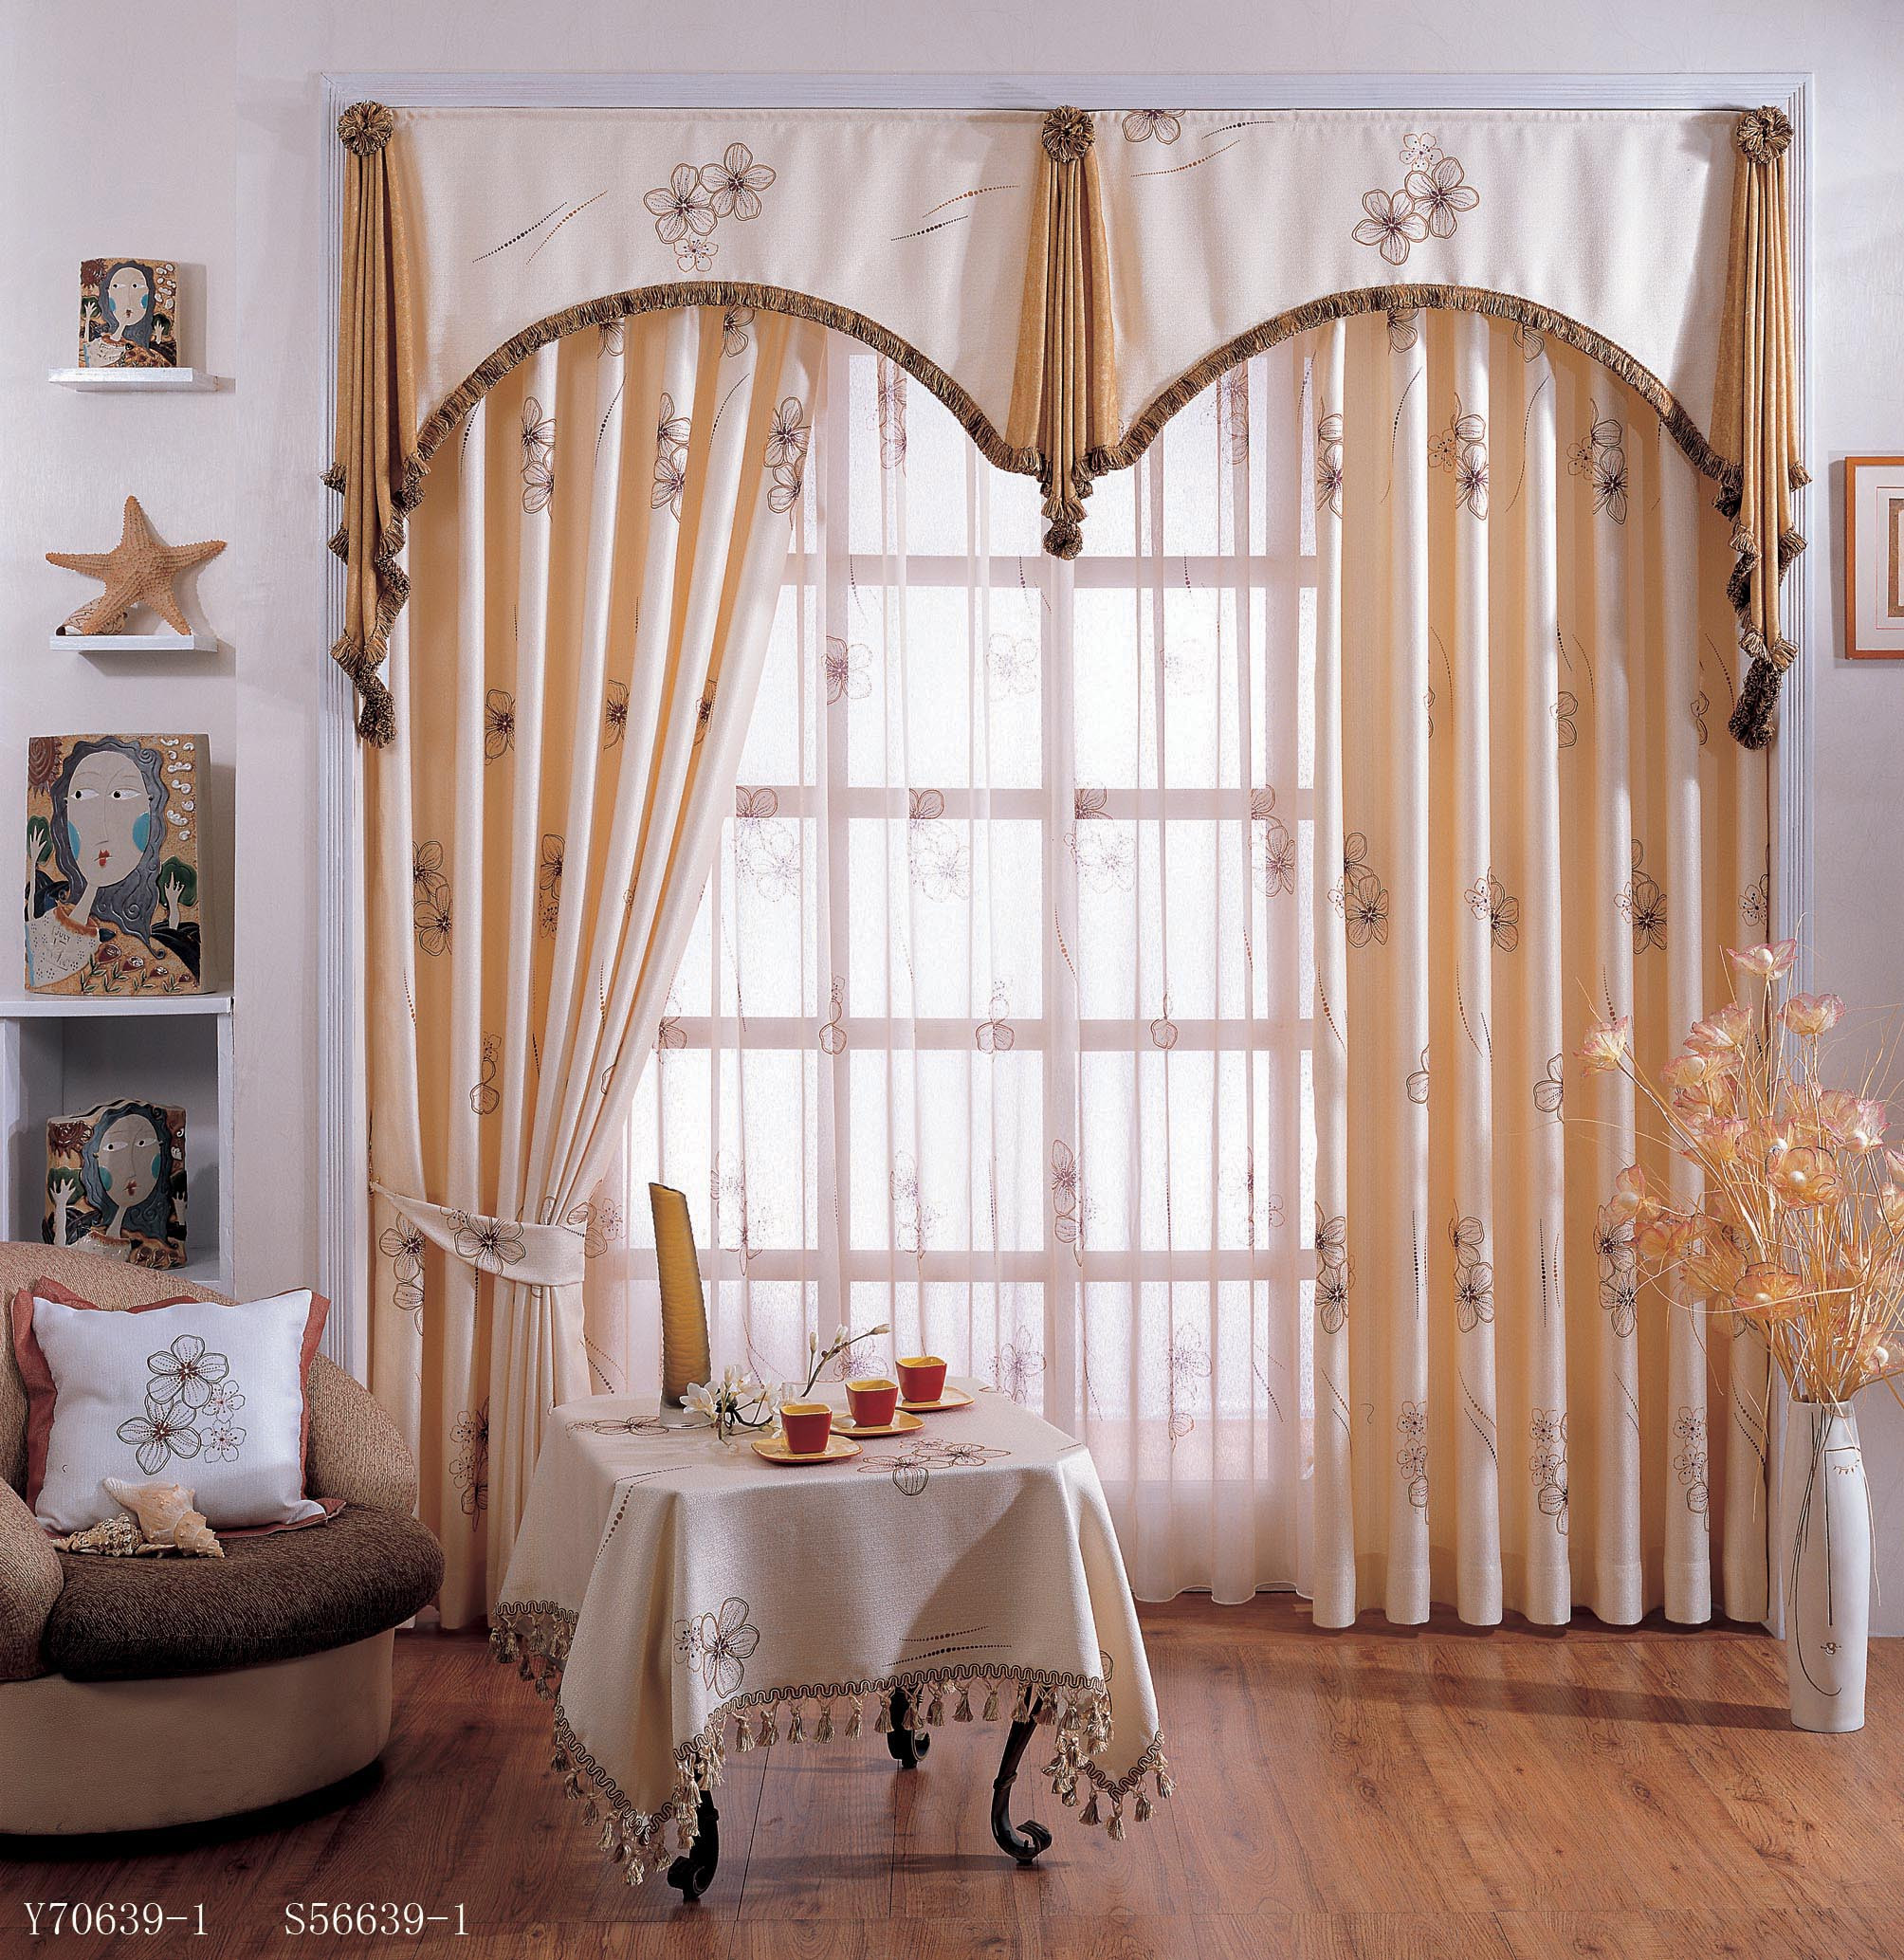 Curtain Valances For Living Room
 Valances For Living Room Ideas – Modern House